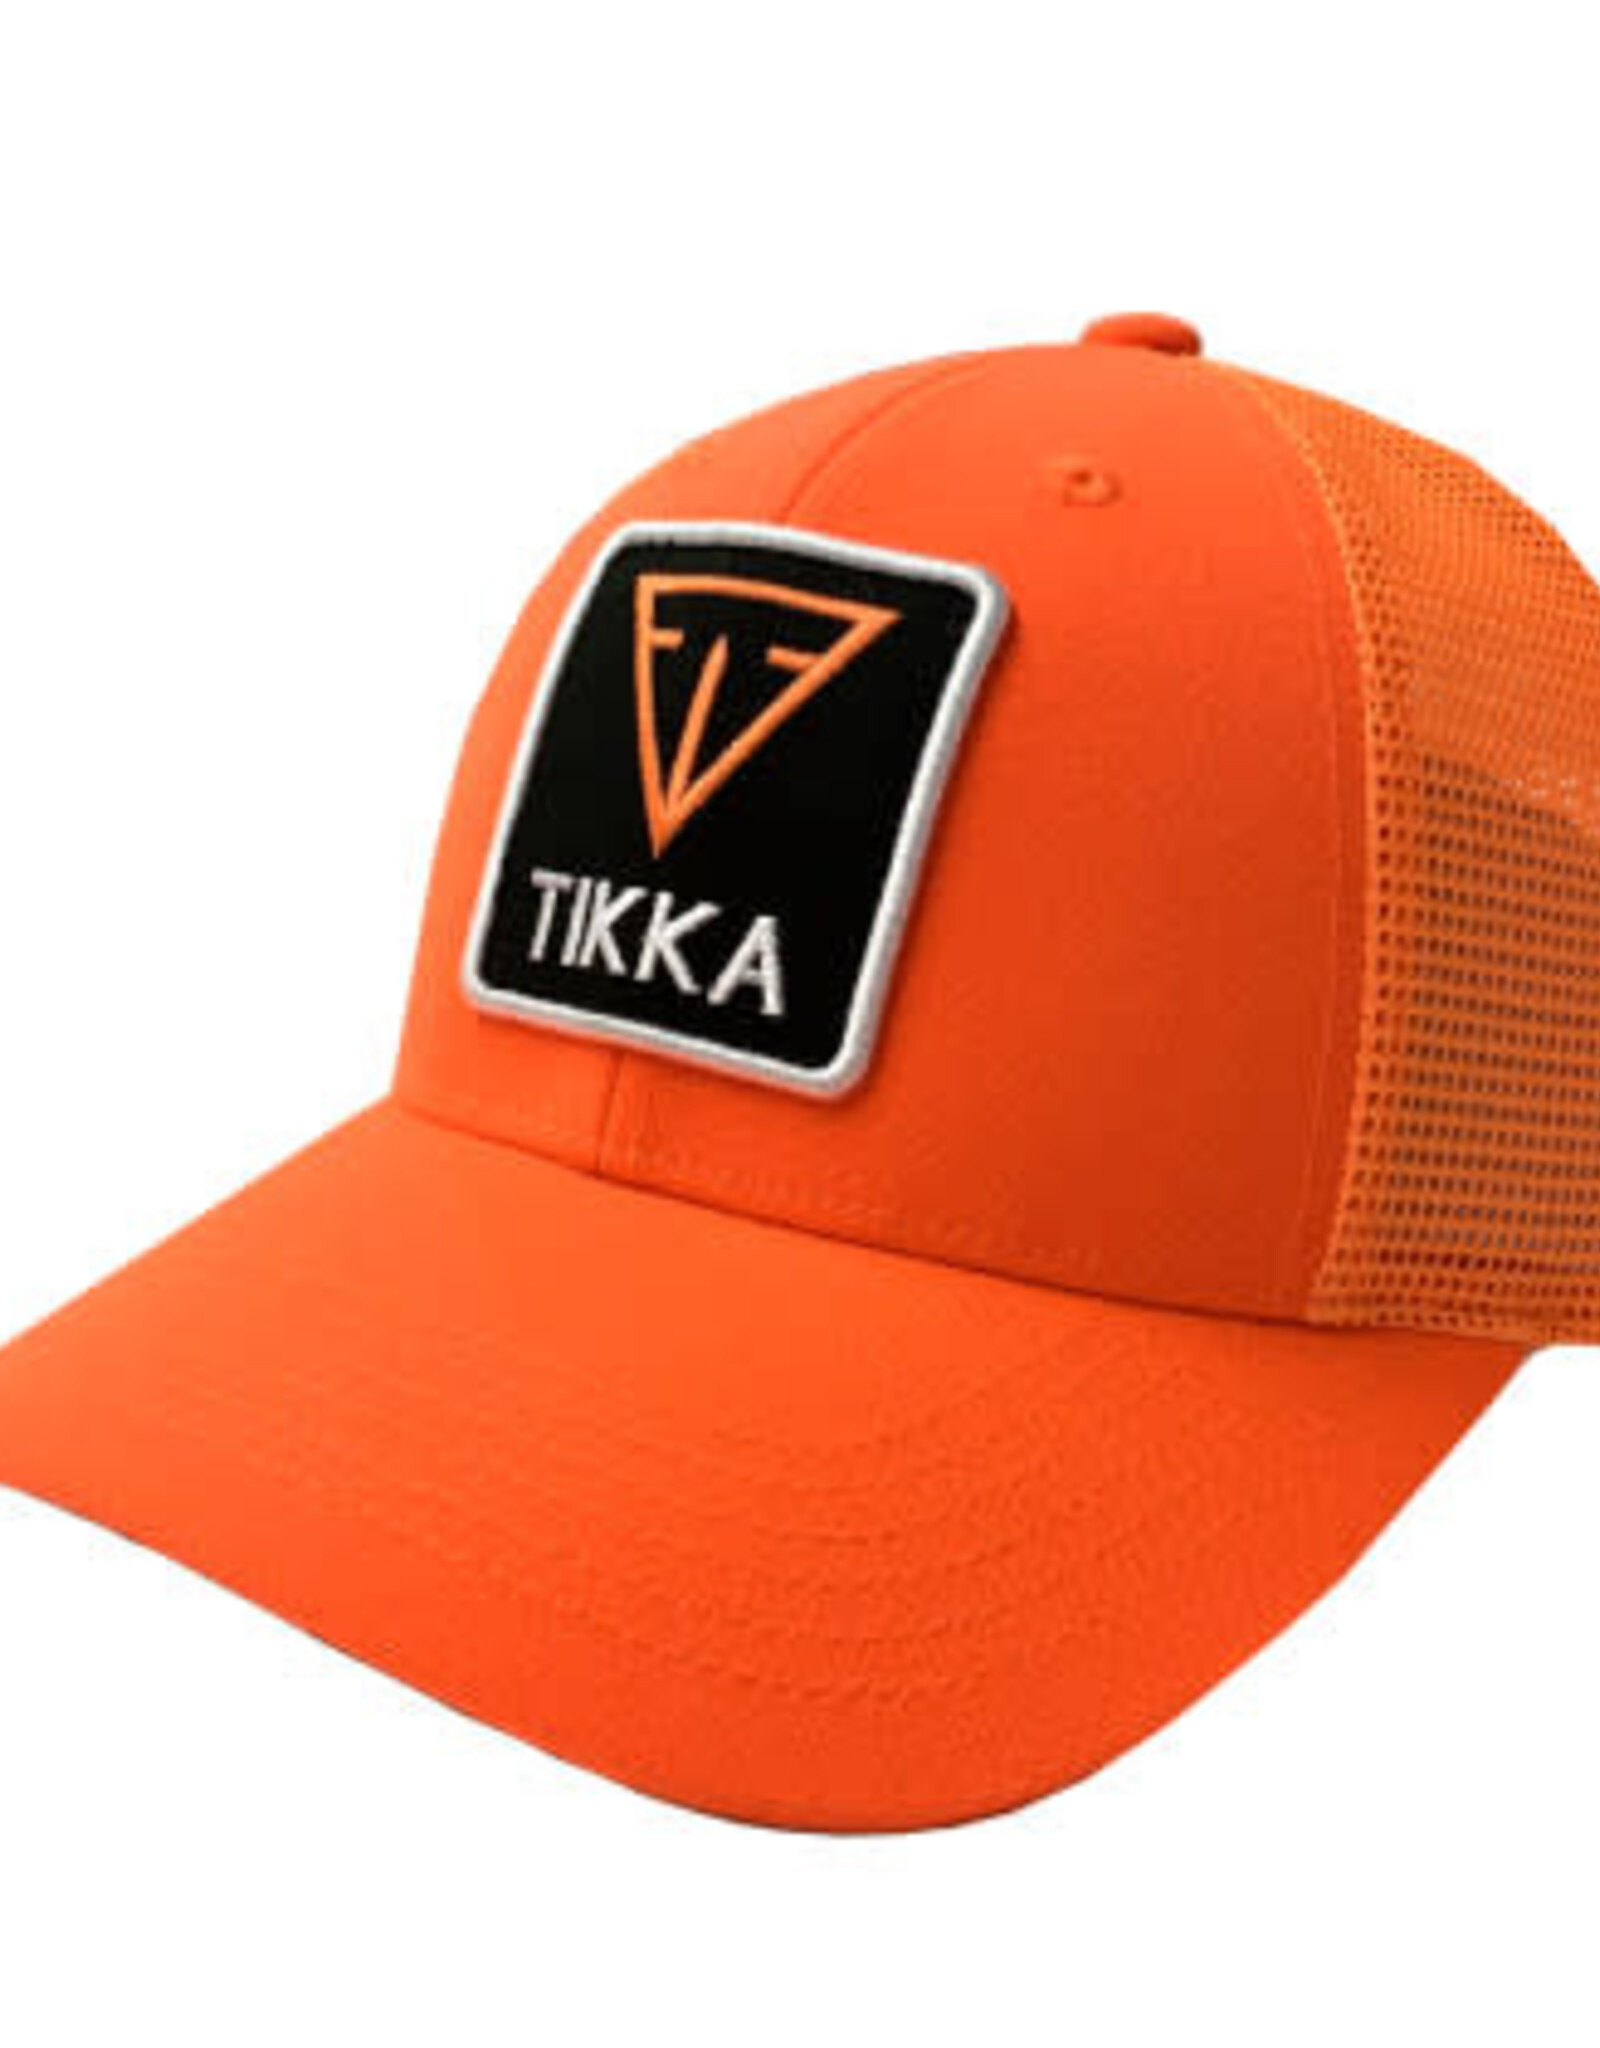 Tikka Trucker Hat